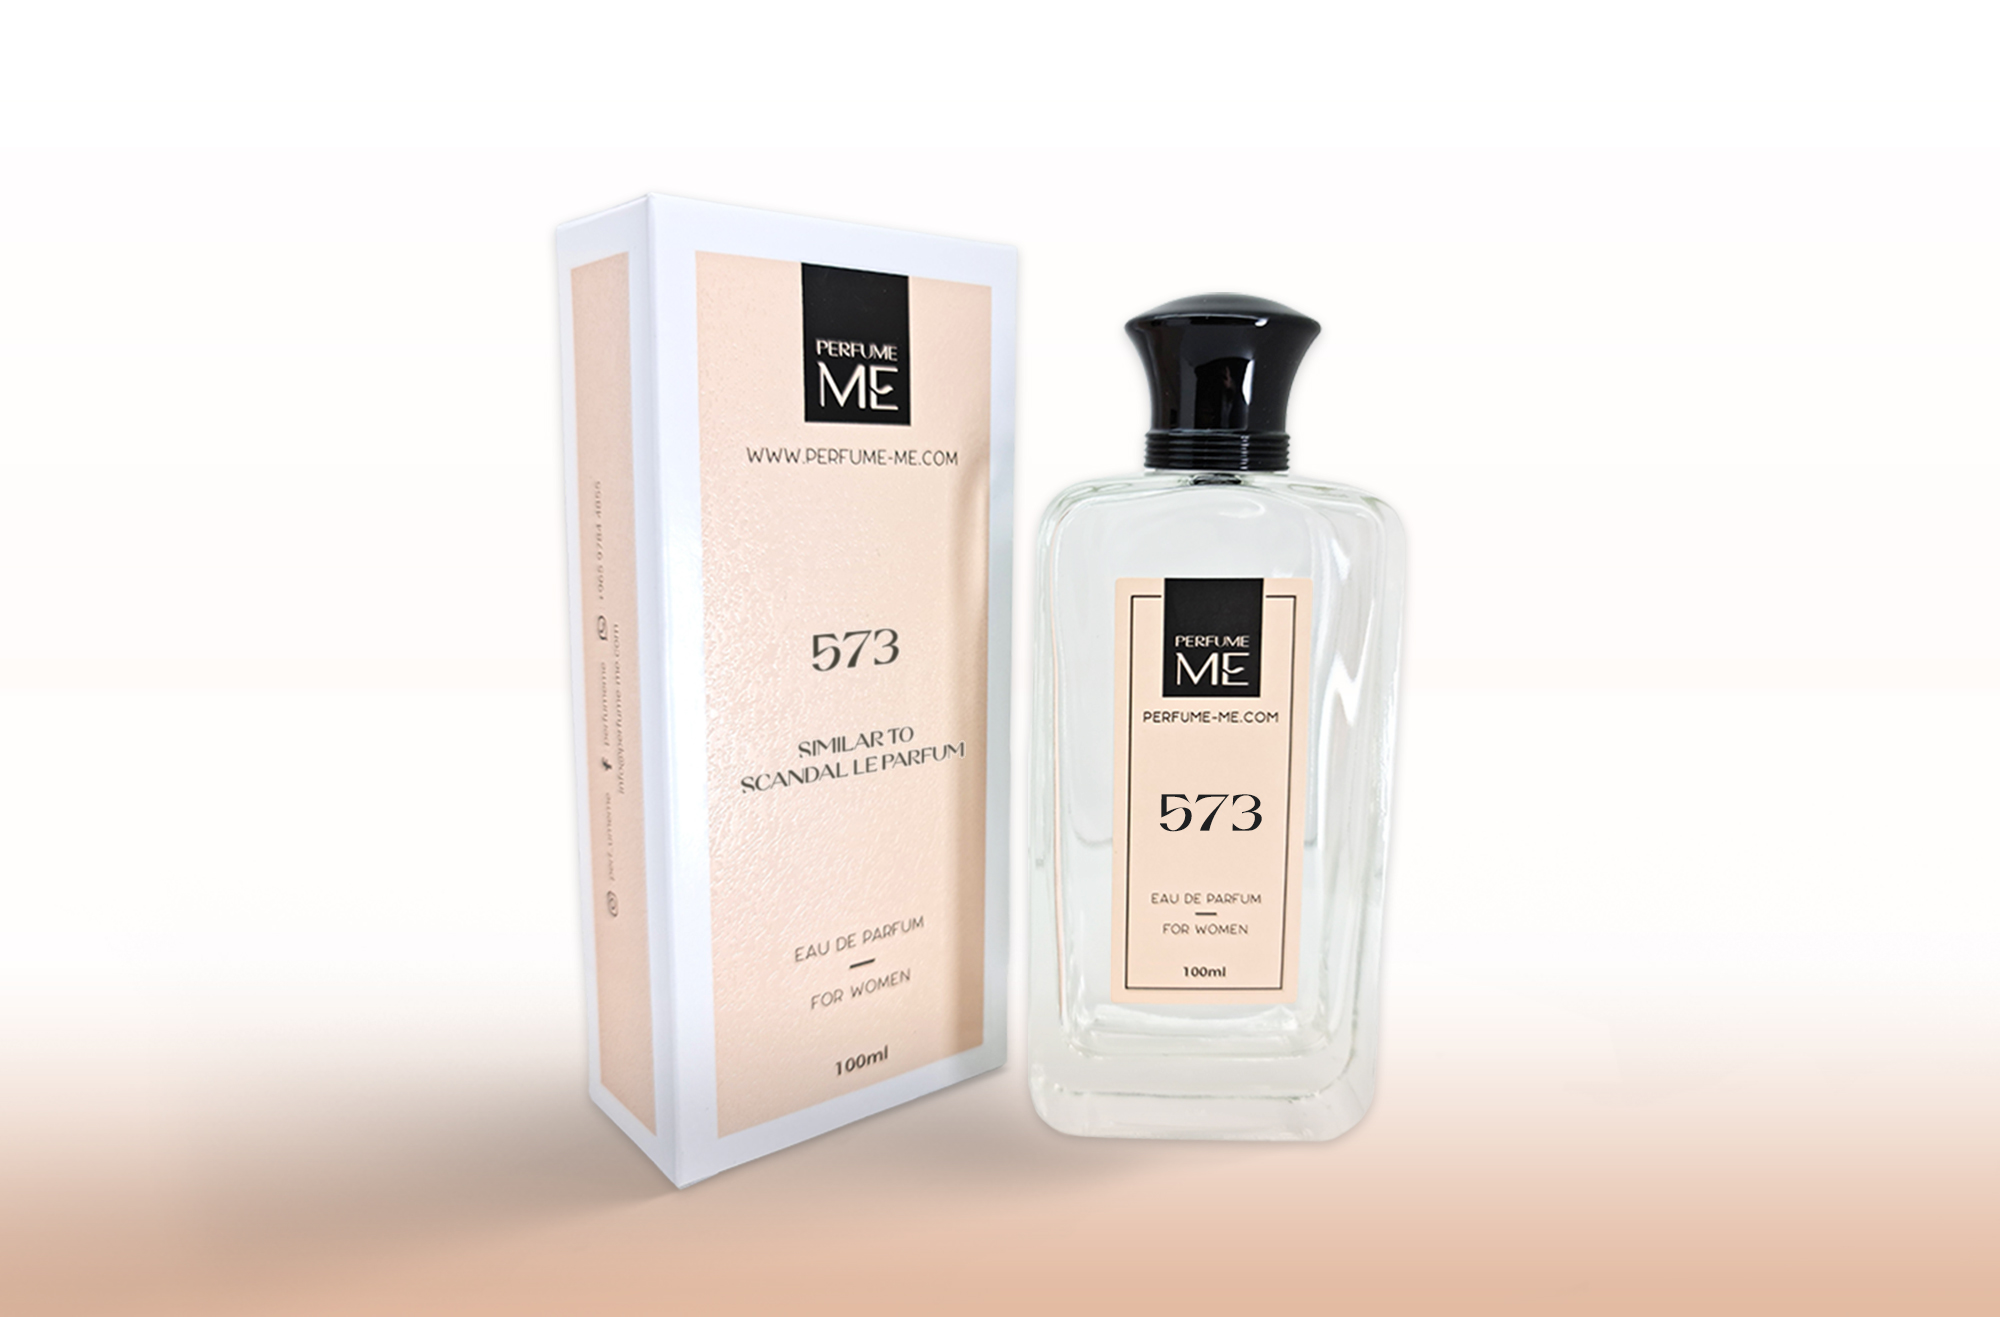 ME by Gaultier PERFUME – Paul عطرني Parfum ME Le Scandal – Jean to 573: Similar Perfume